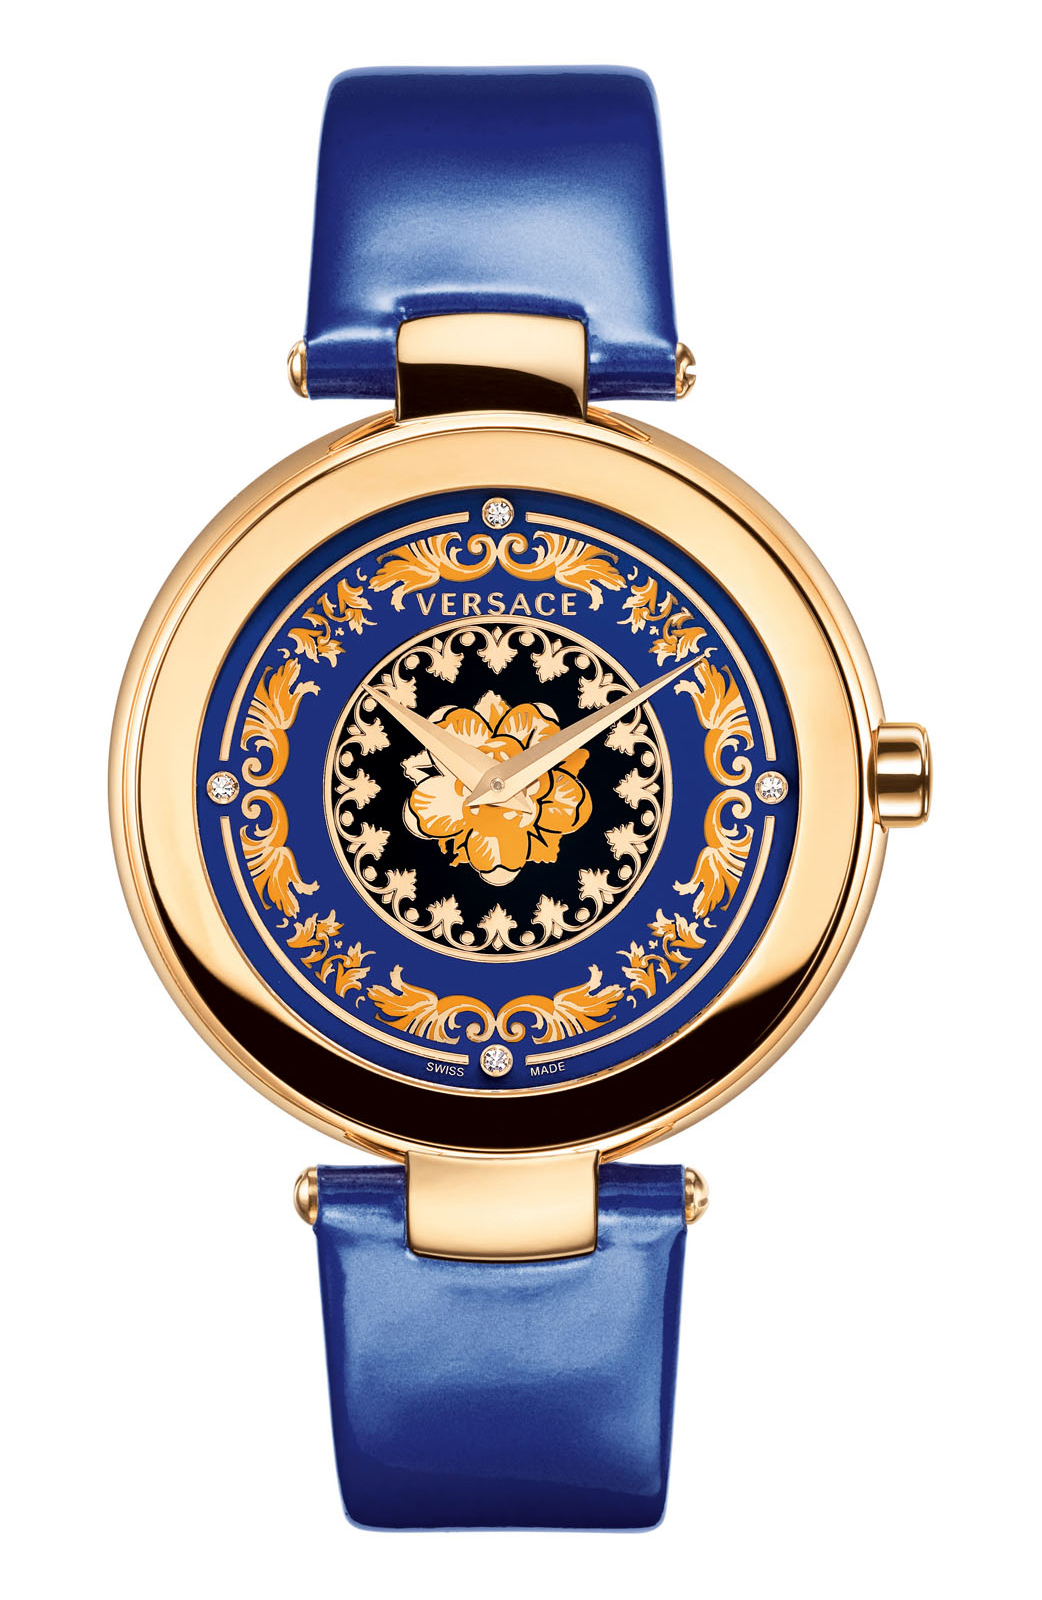 Versace QUARTZ watch 762.2 ROSE GOLD BLUE LEATHER